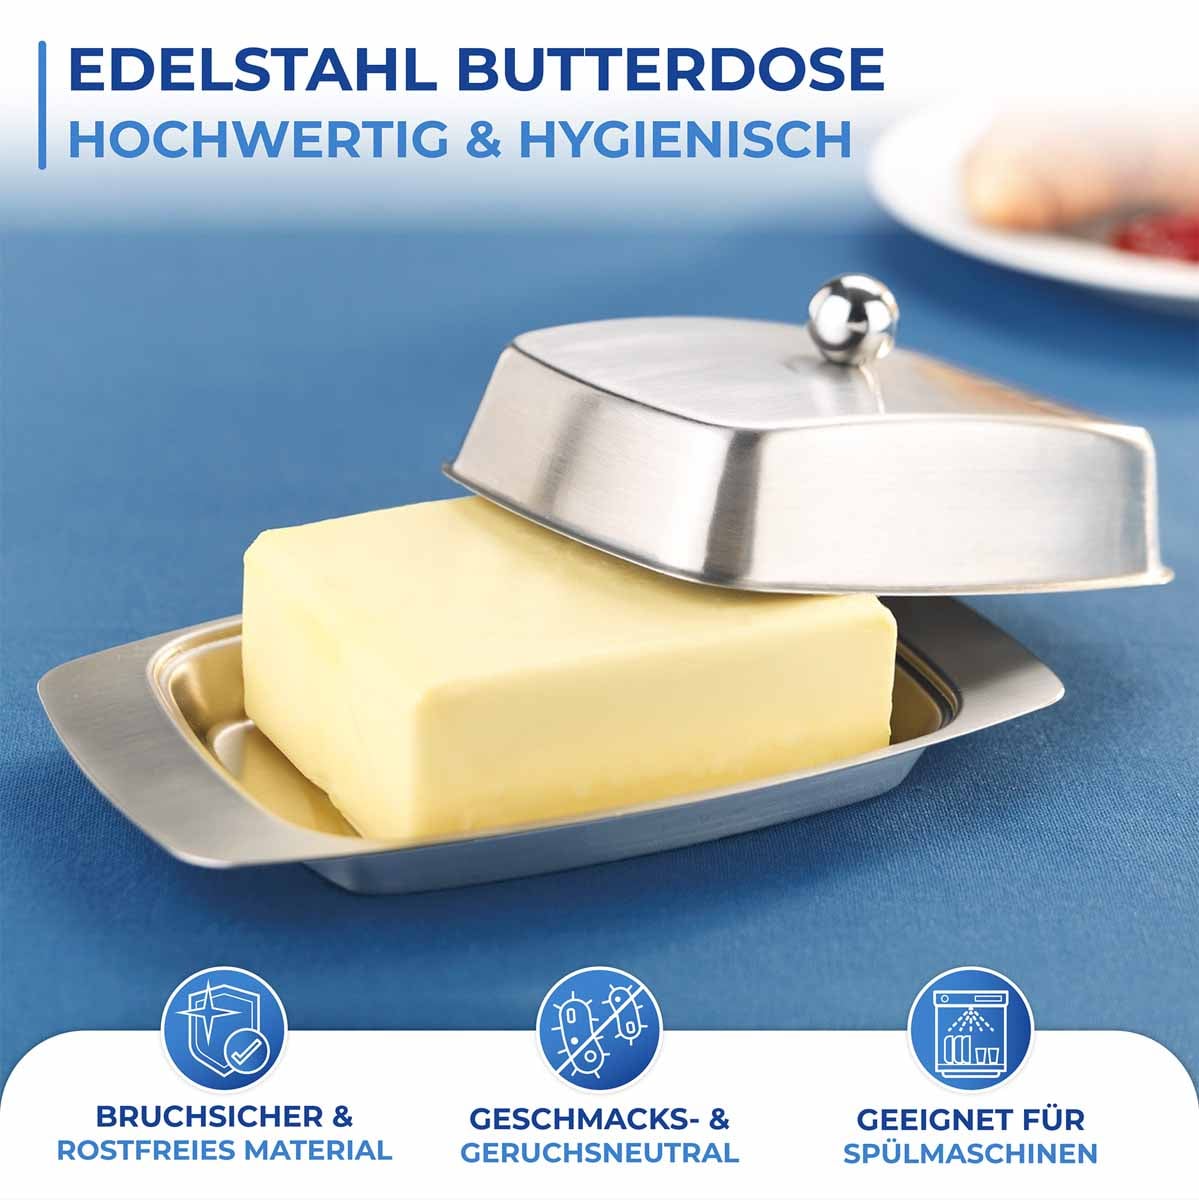 Butterdose Edelstahl